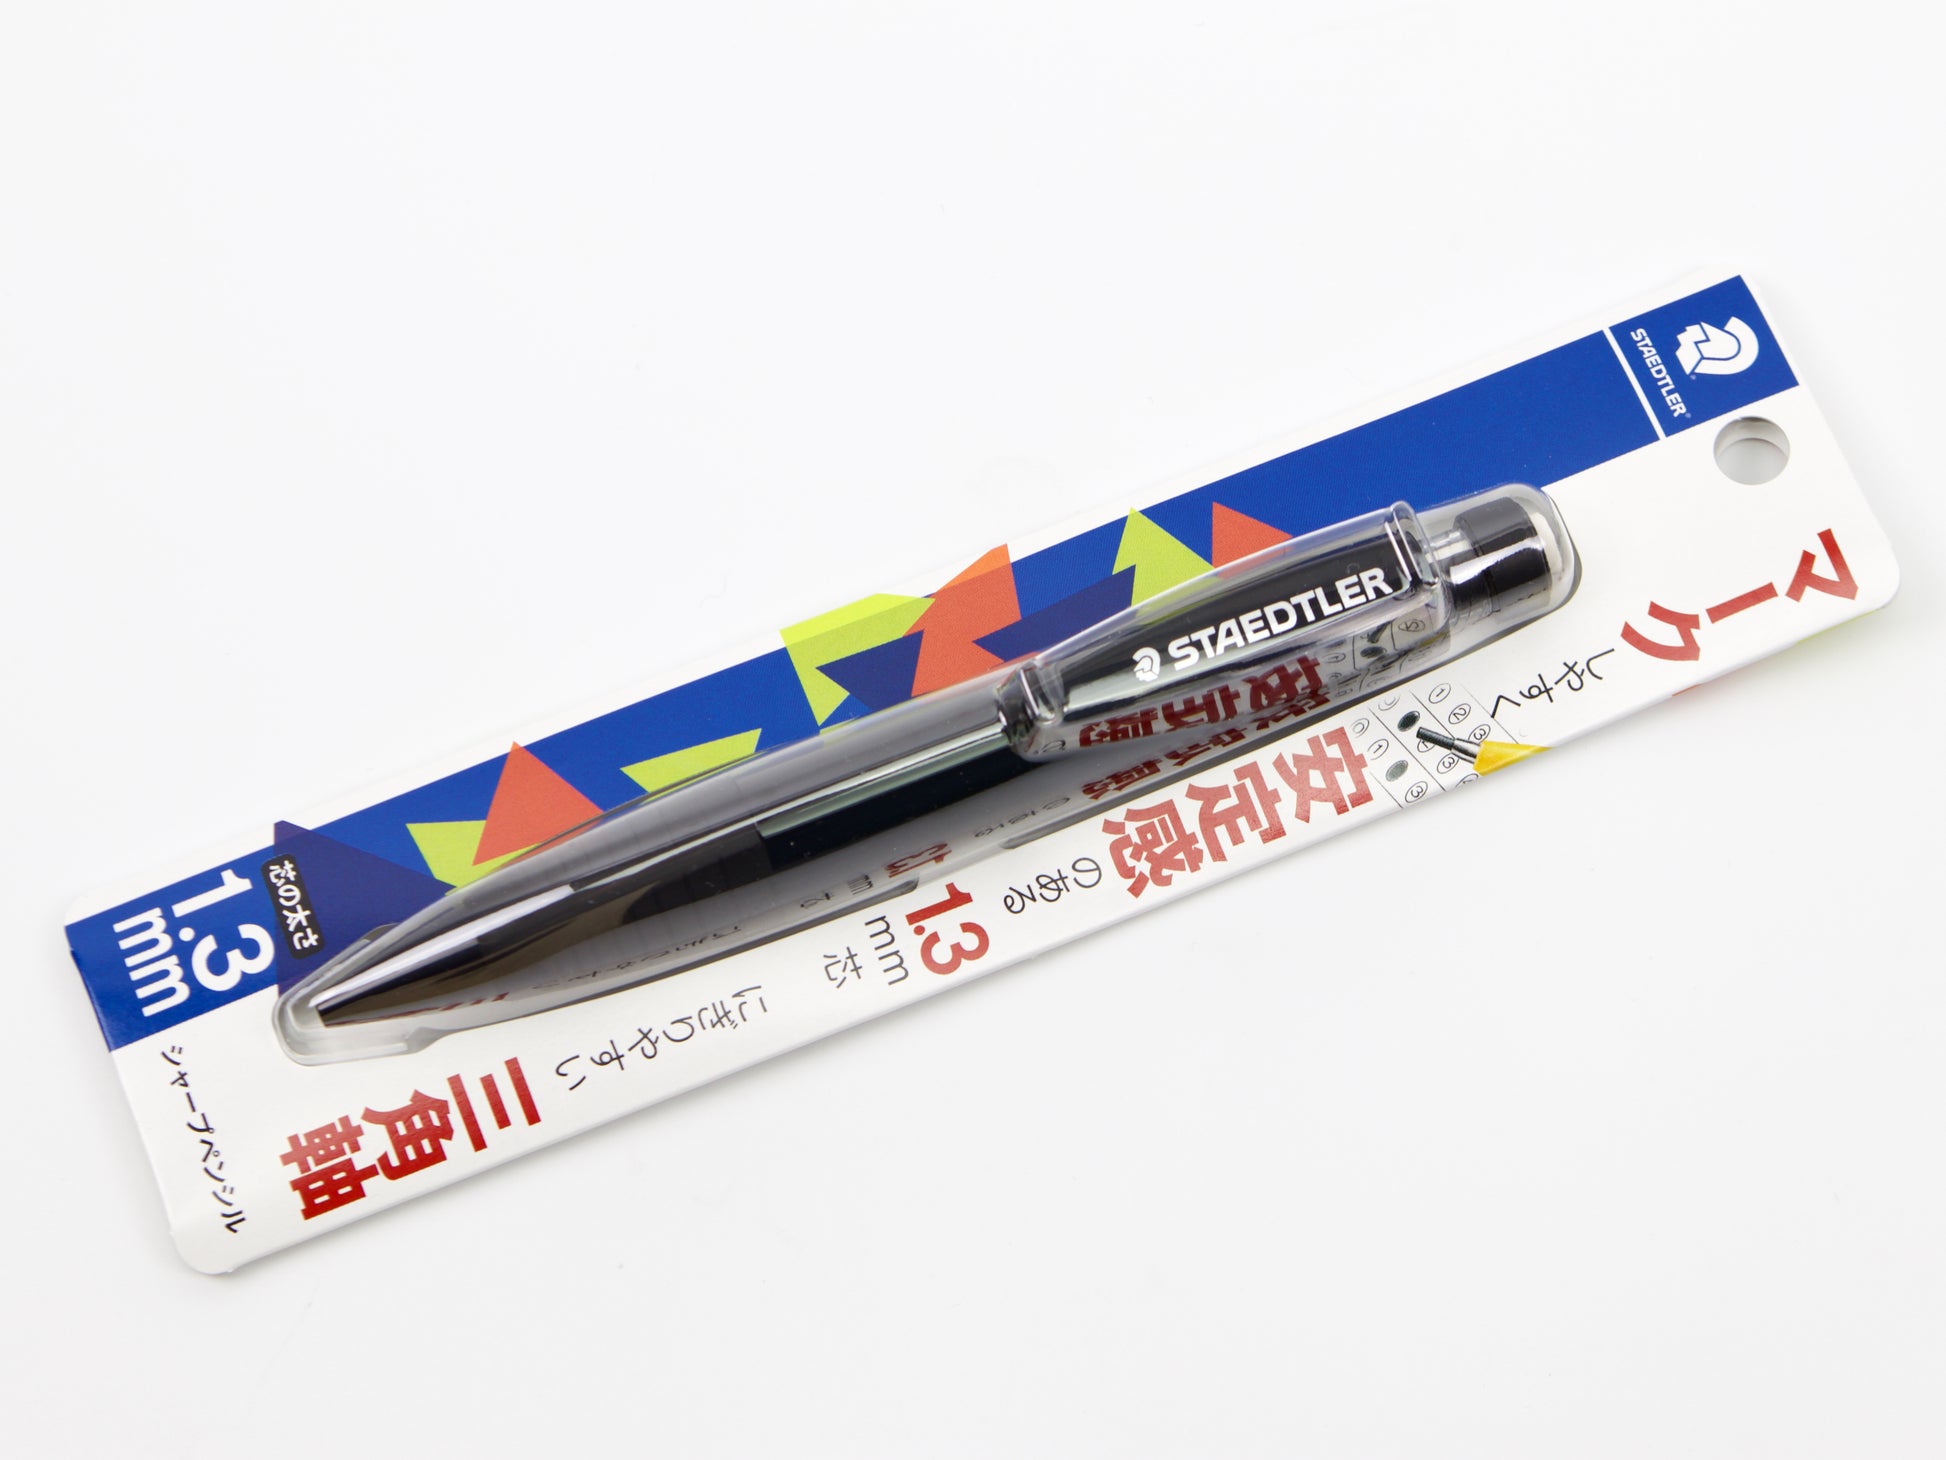 Staedtler 925-25 - Tokyo Pen Shop